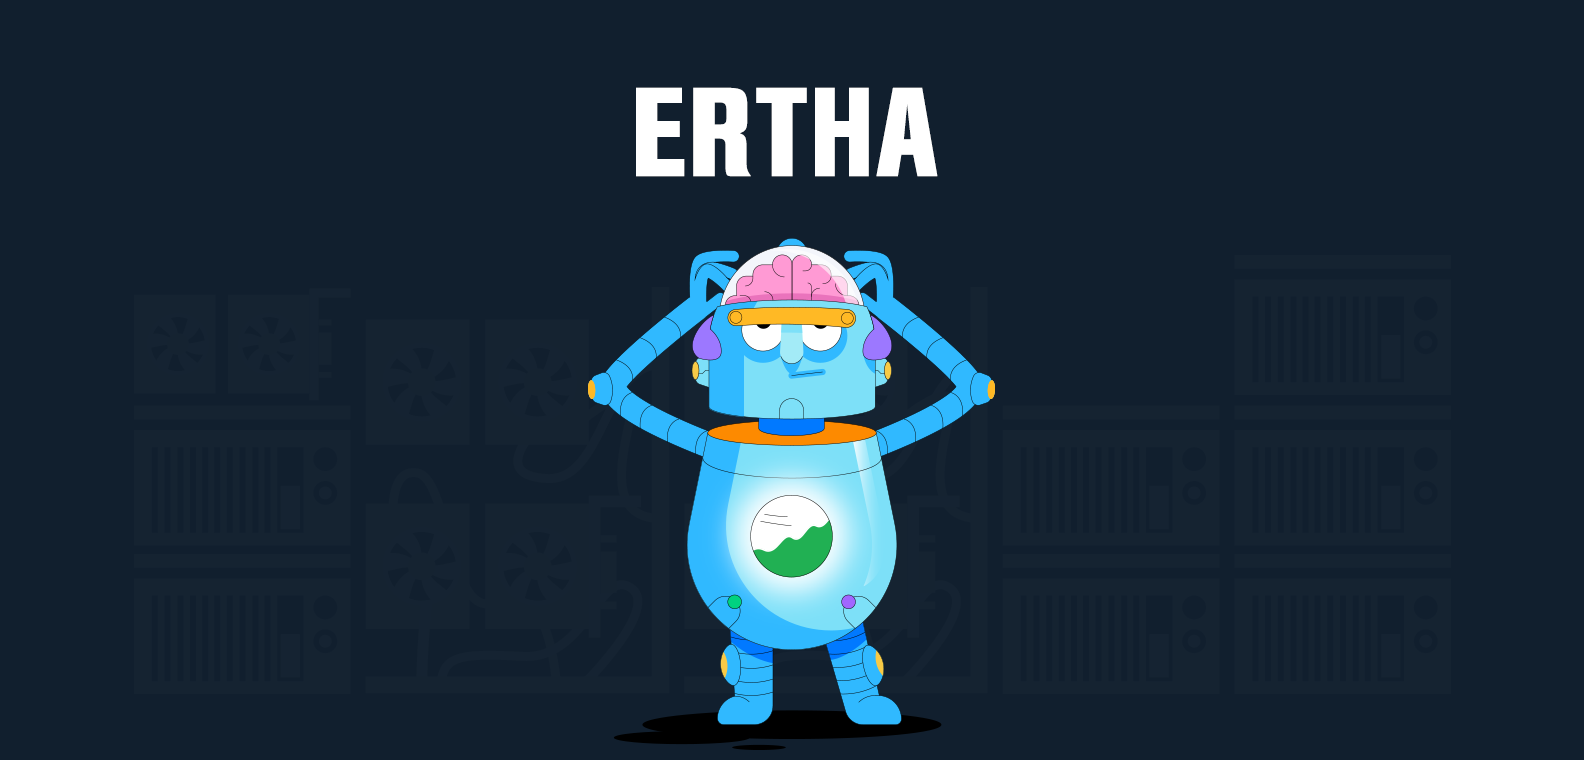 Ertha: P2E Metaverse Game That Replicates Real-Life